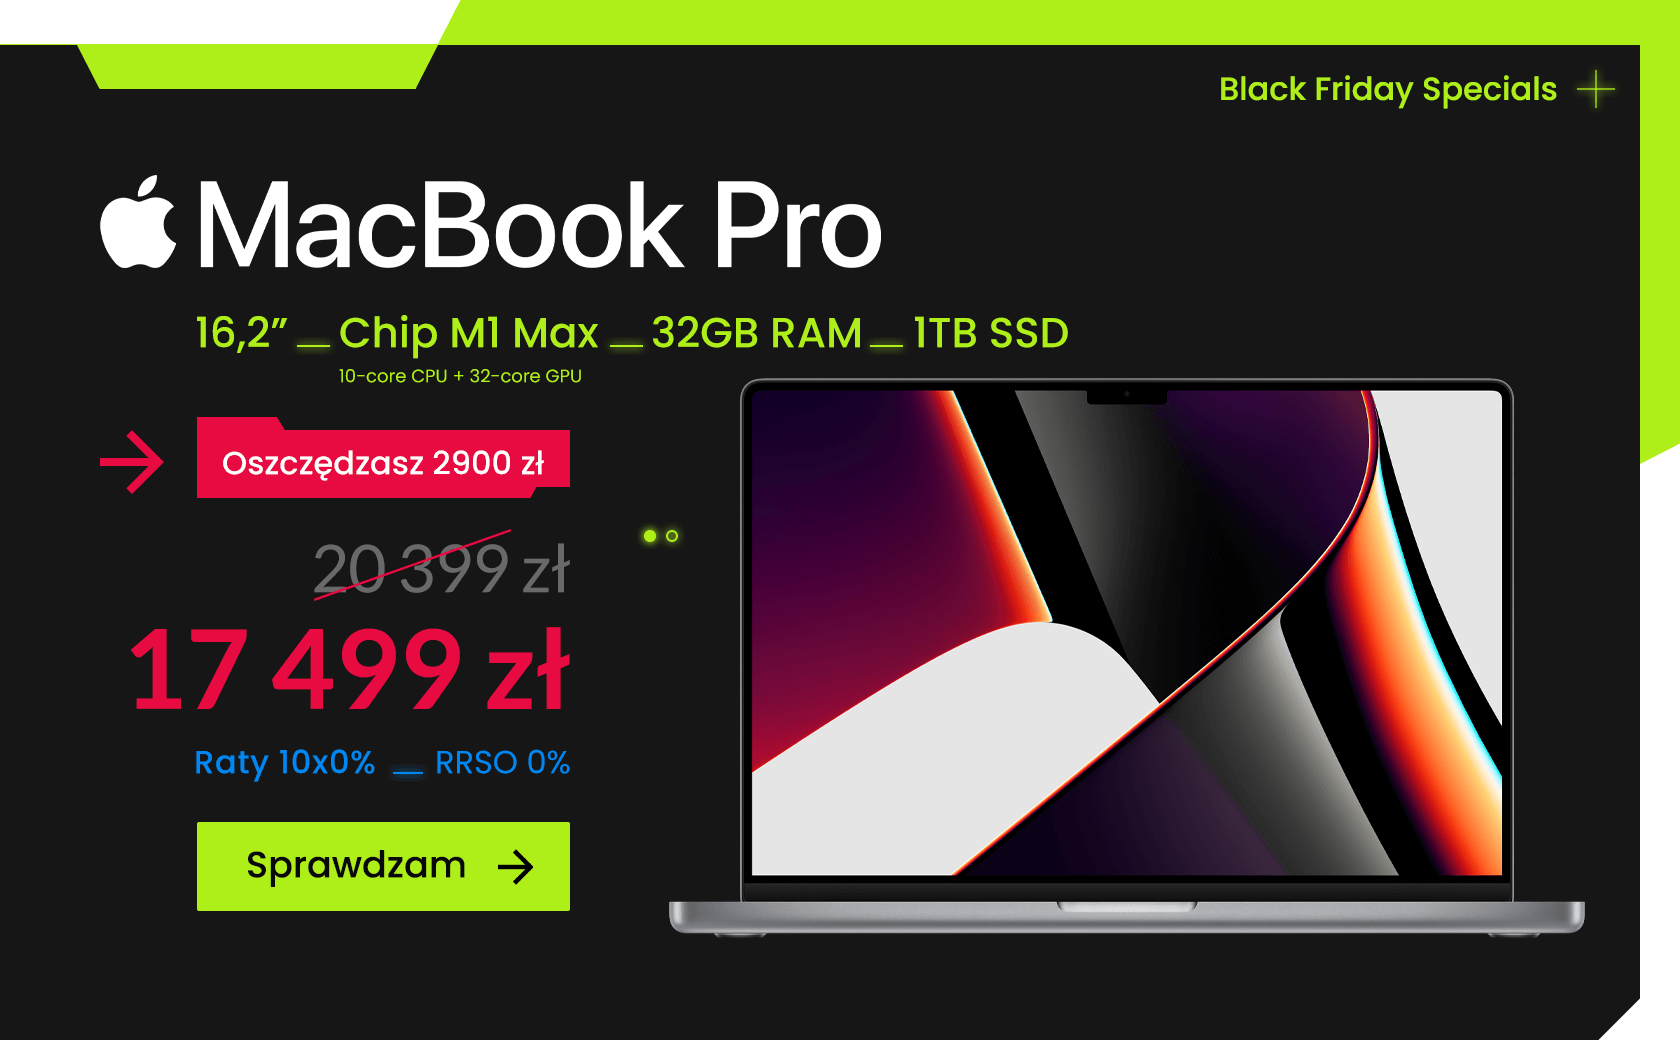 Black Friday Specials - MacBook Pro 16